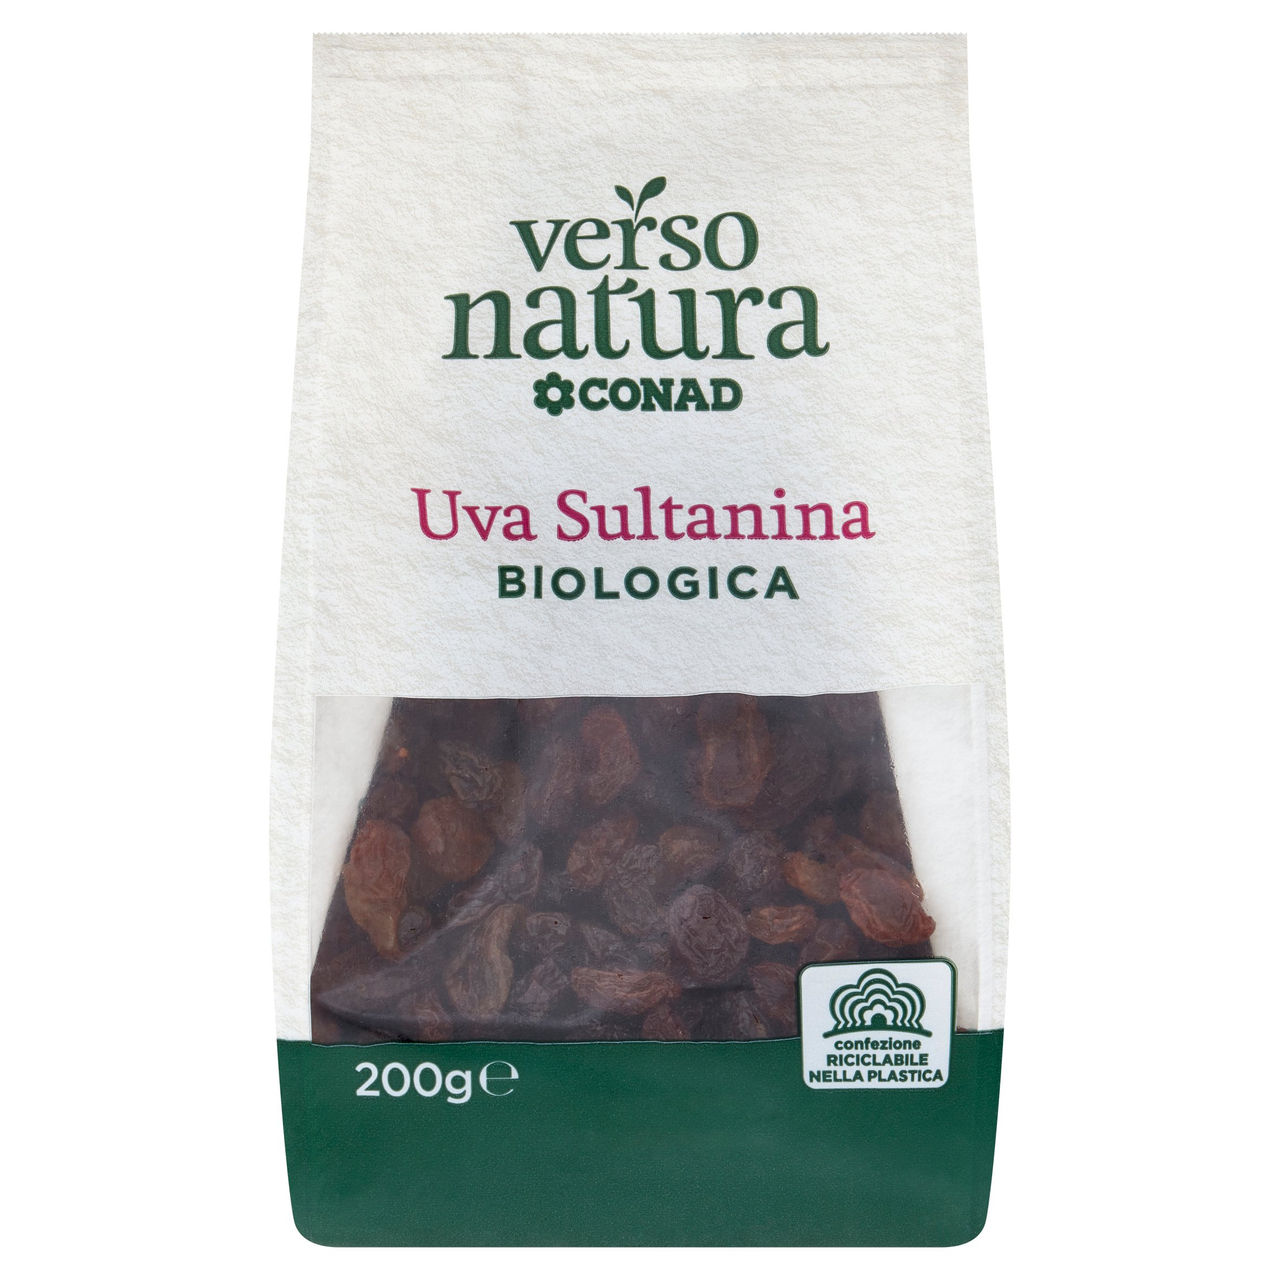 Uva Sultanina Biologica Conad in vendita online